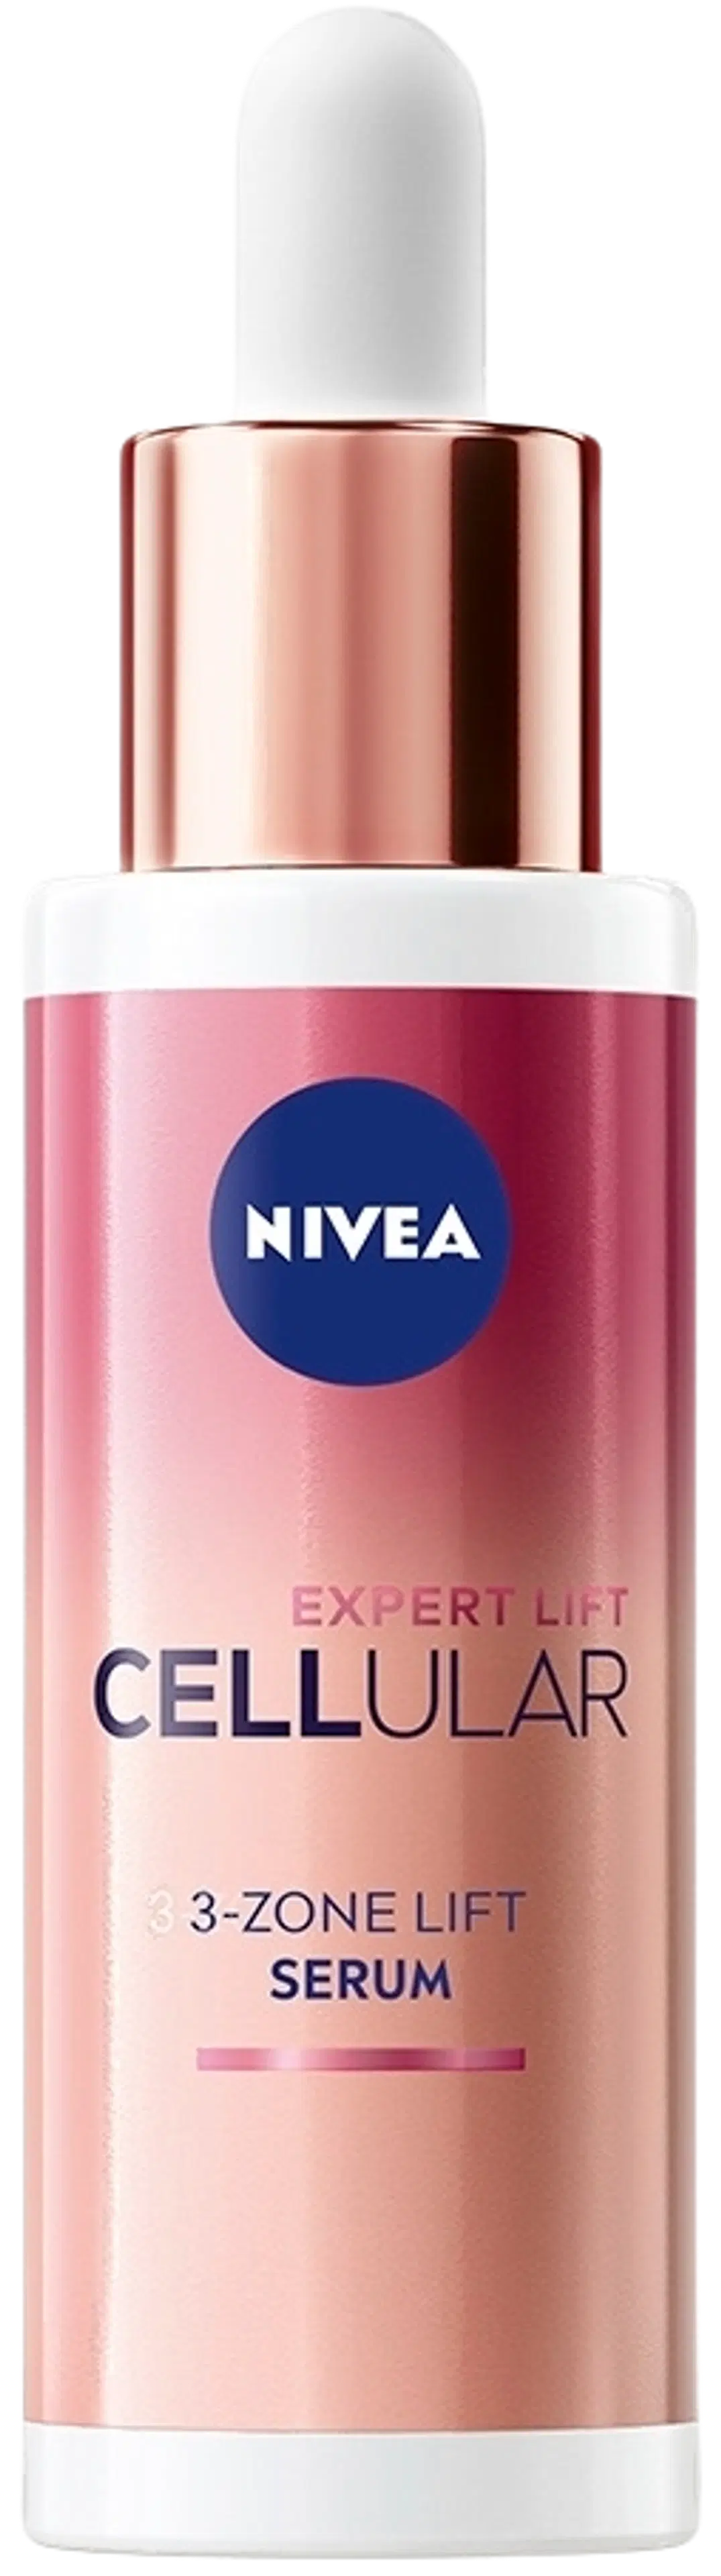 NIVEA 30ml Cellular Expert Lift 3-zone Lift Serum -kasvoseerumi